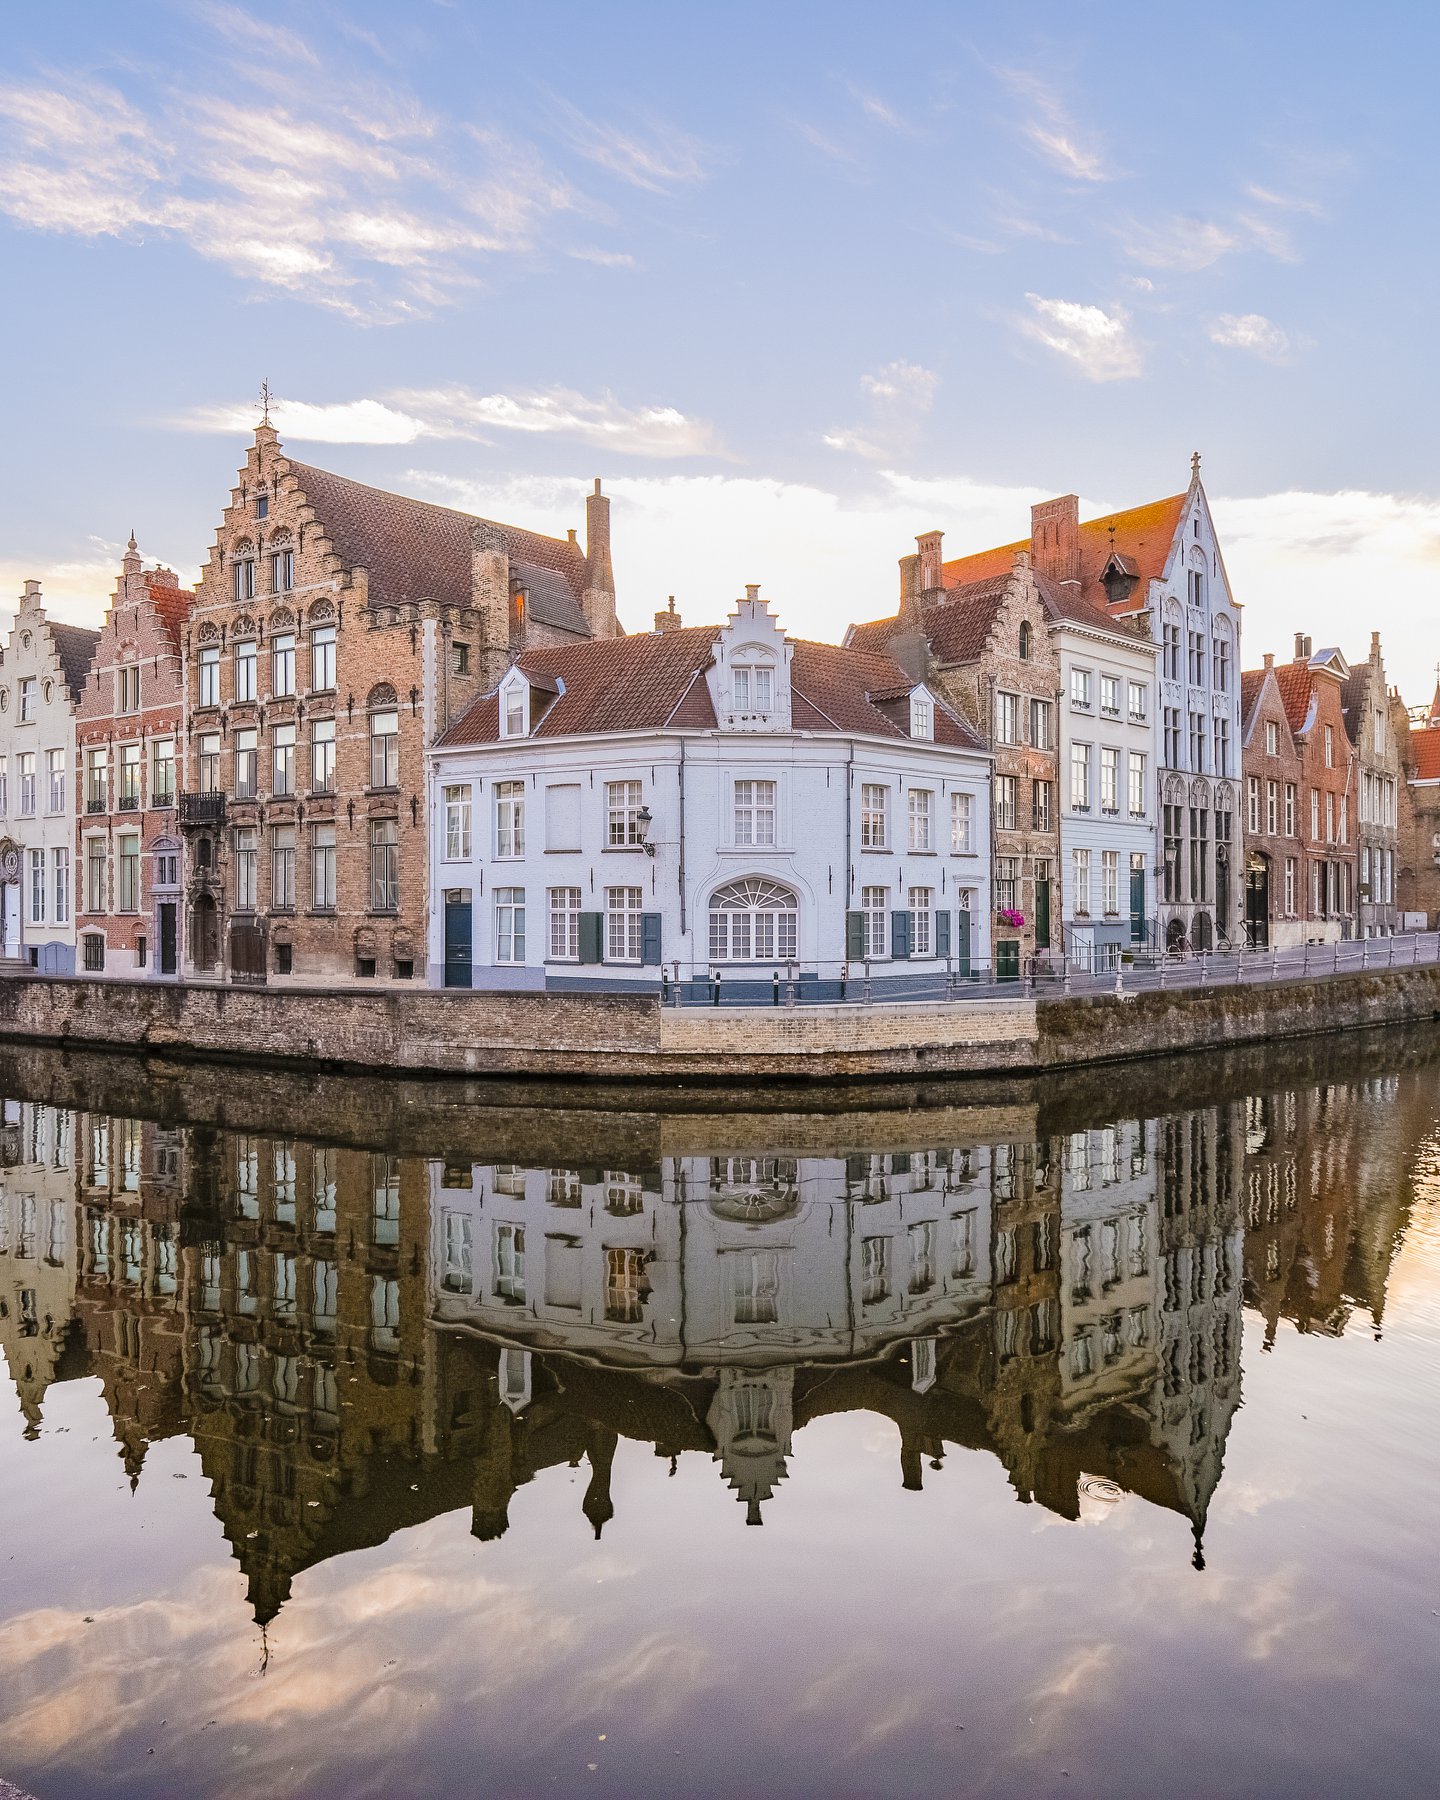 Brugge - Winter Travel Europe 2020